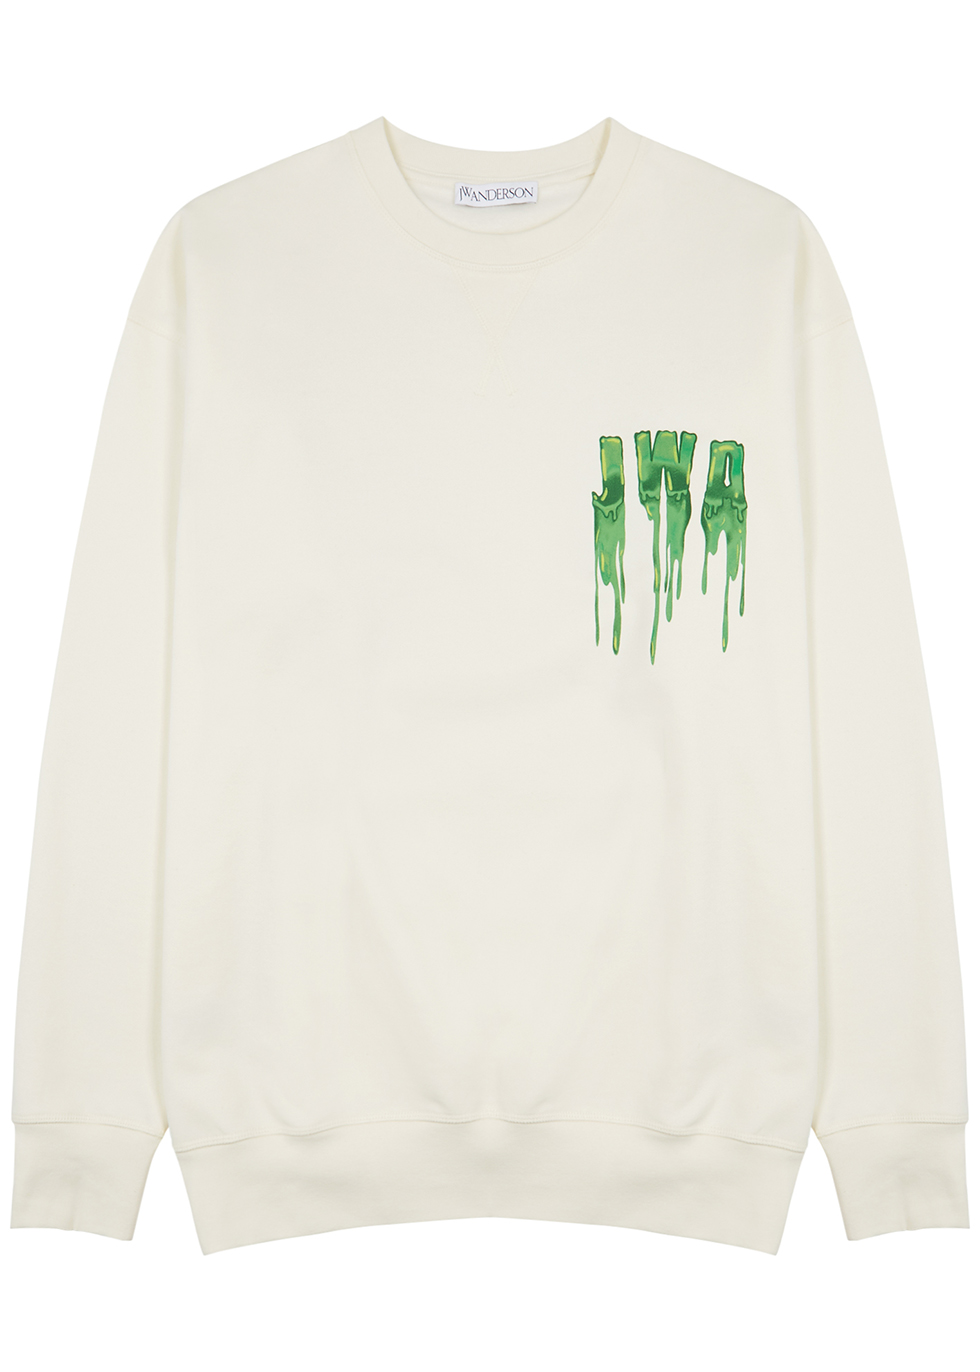 Slime printed cotton sweatshirt